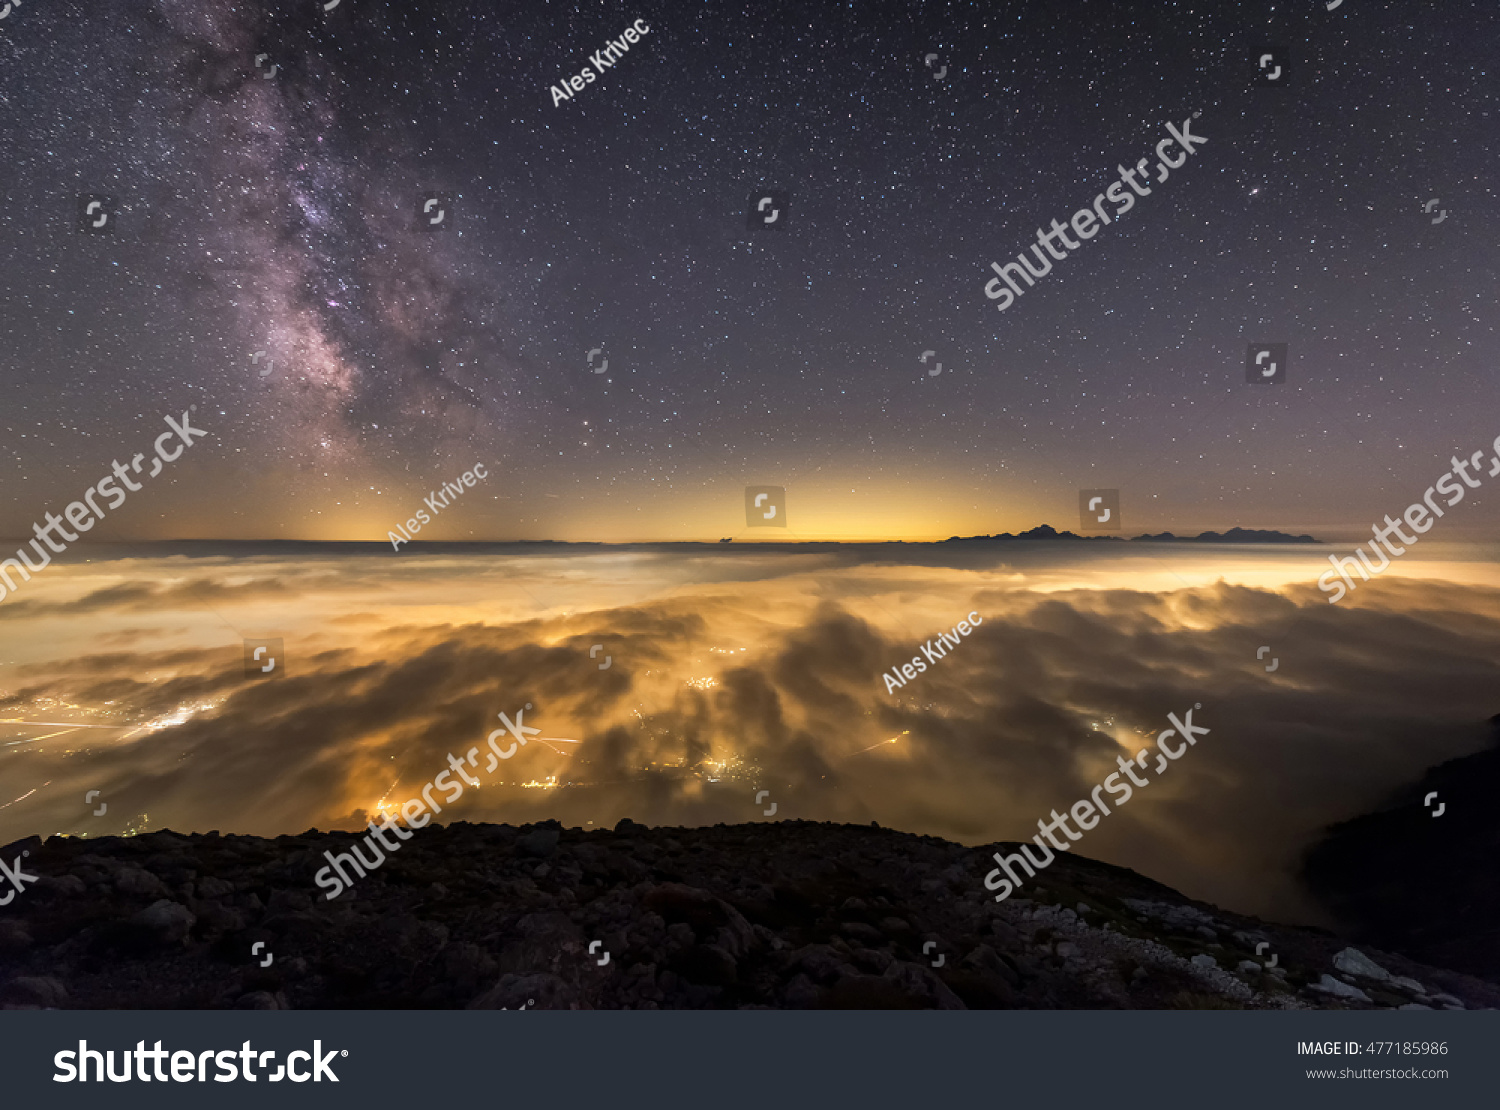 Milky Way over my hometown Jesenice and Triglav mountain #477185986